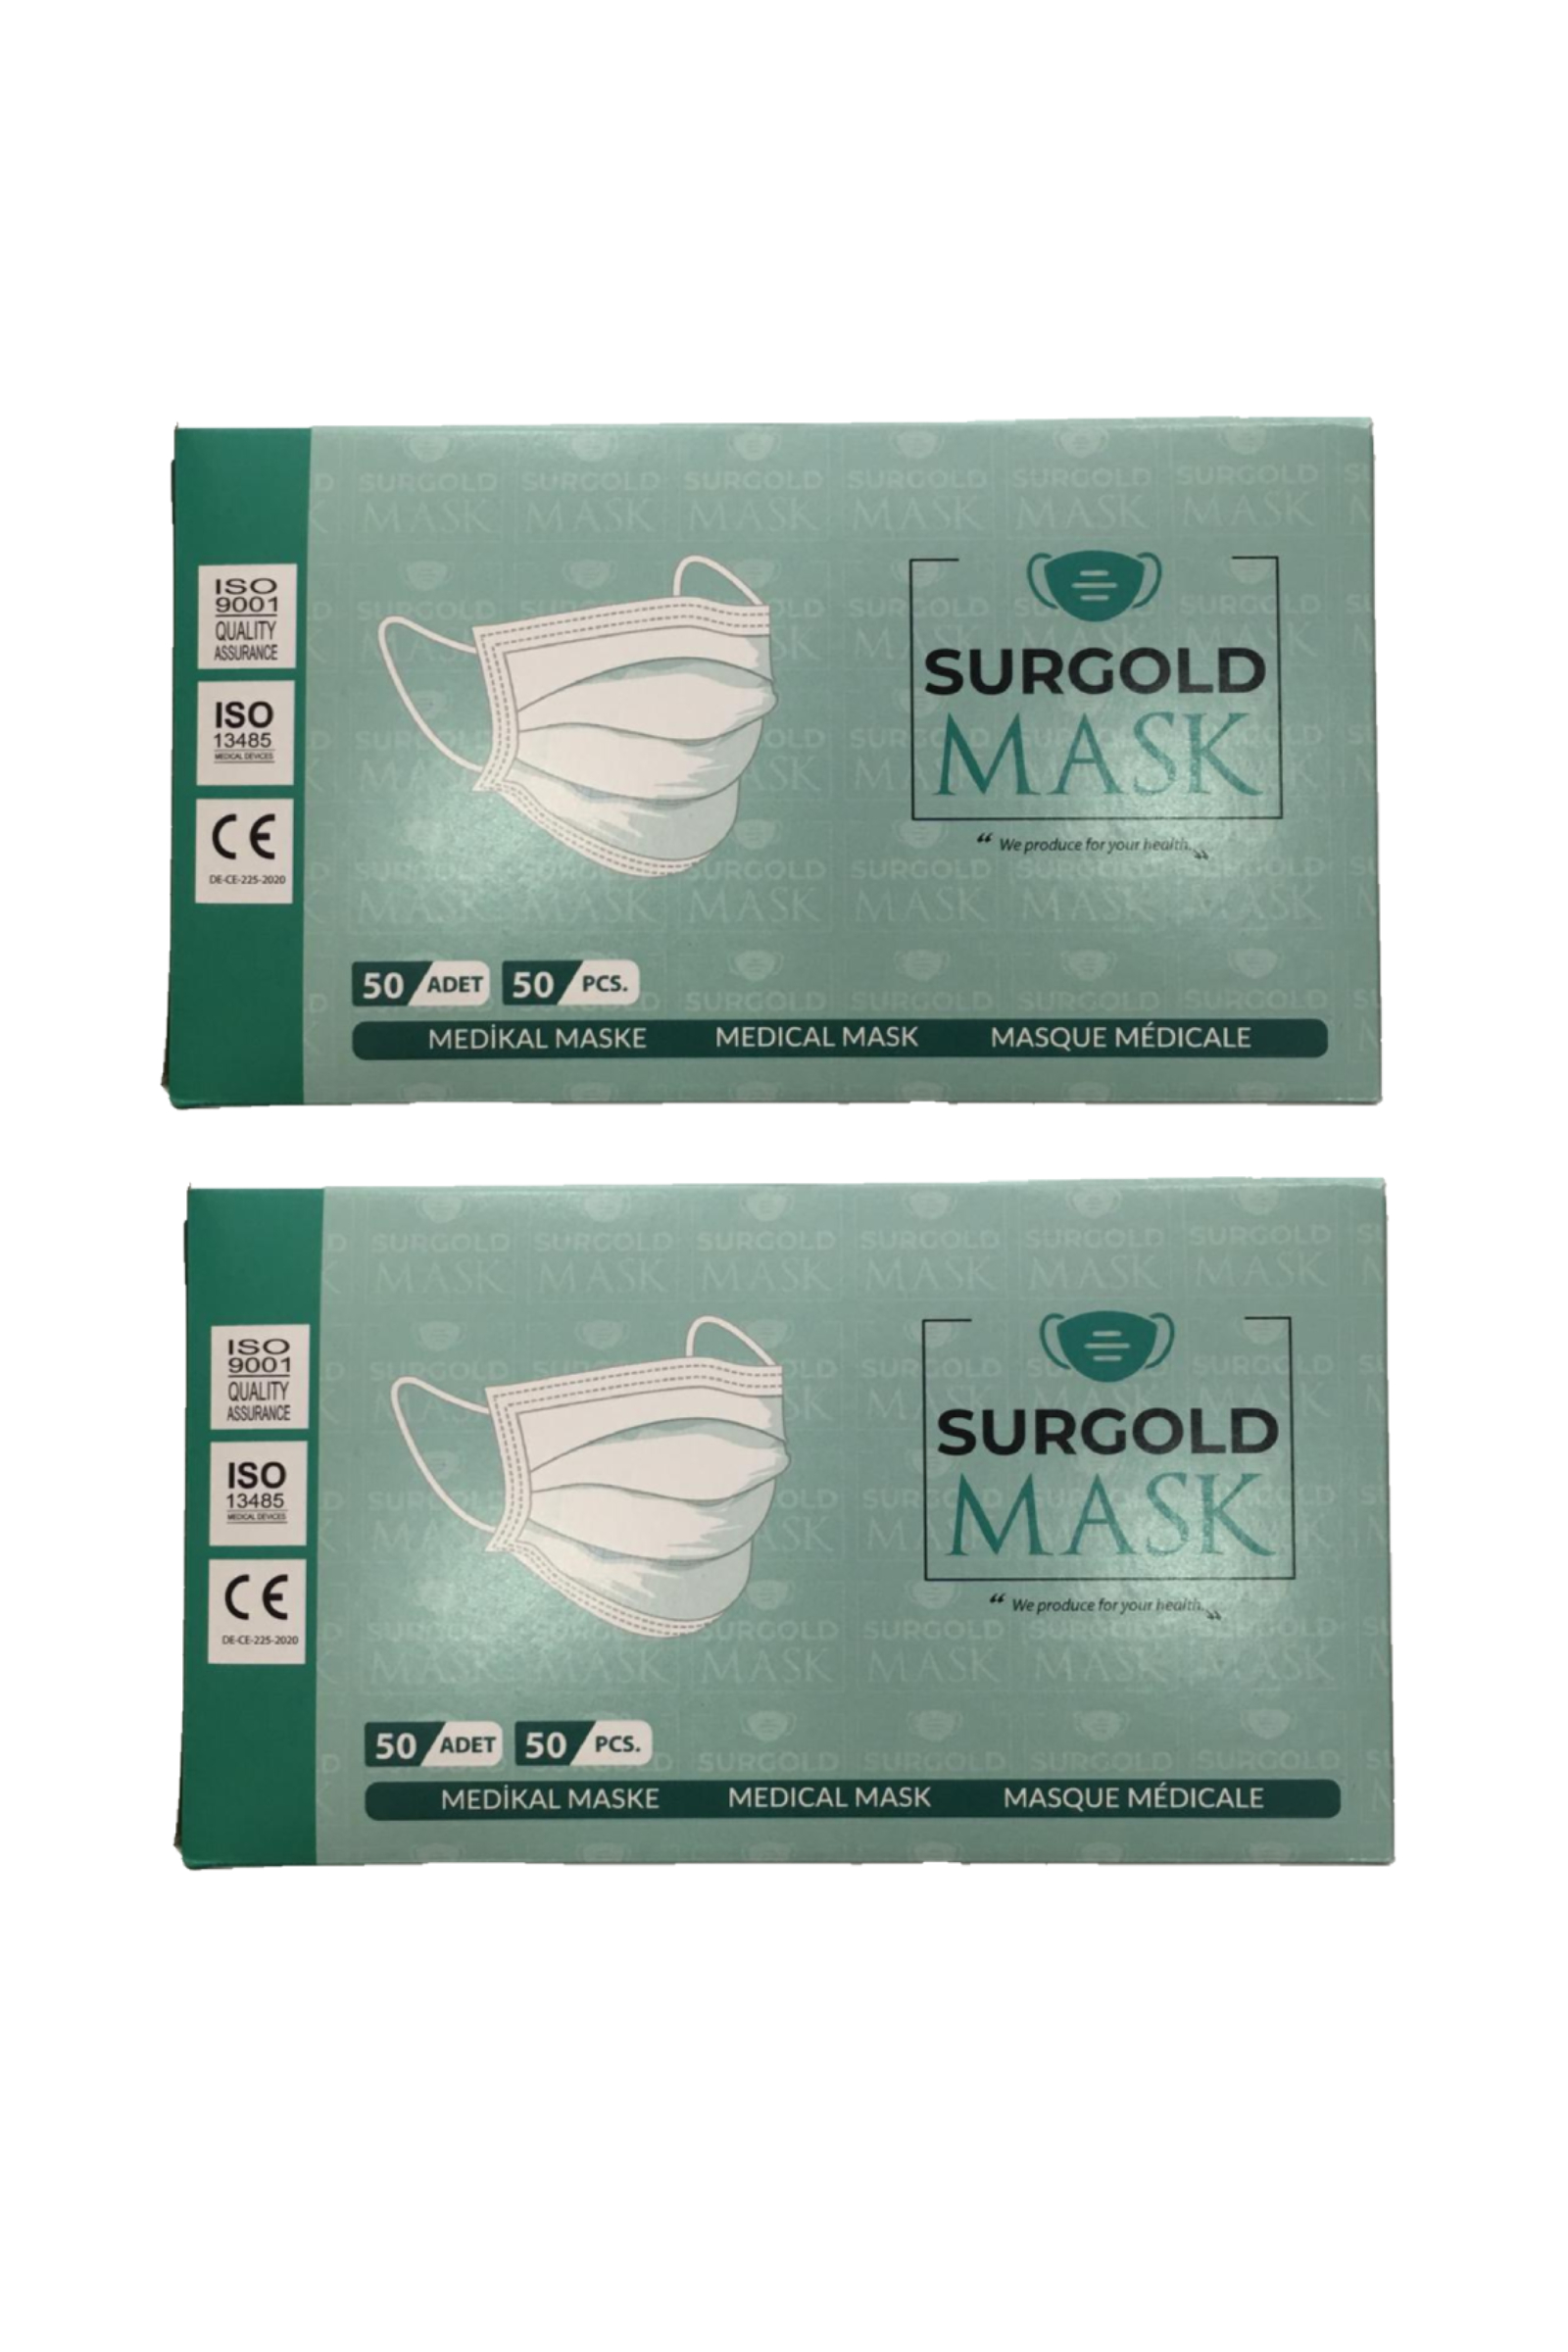 Surgold Maske 2 Kutu 100 Adet - 10'lardı paketlerde